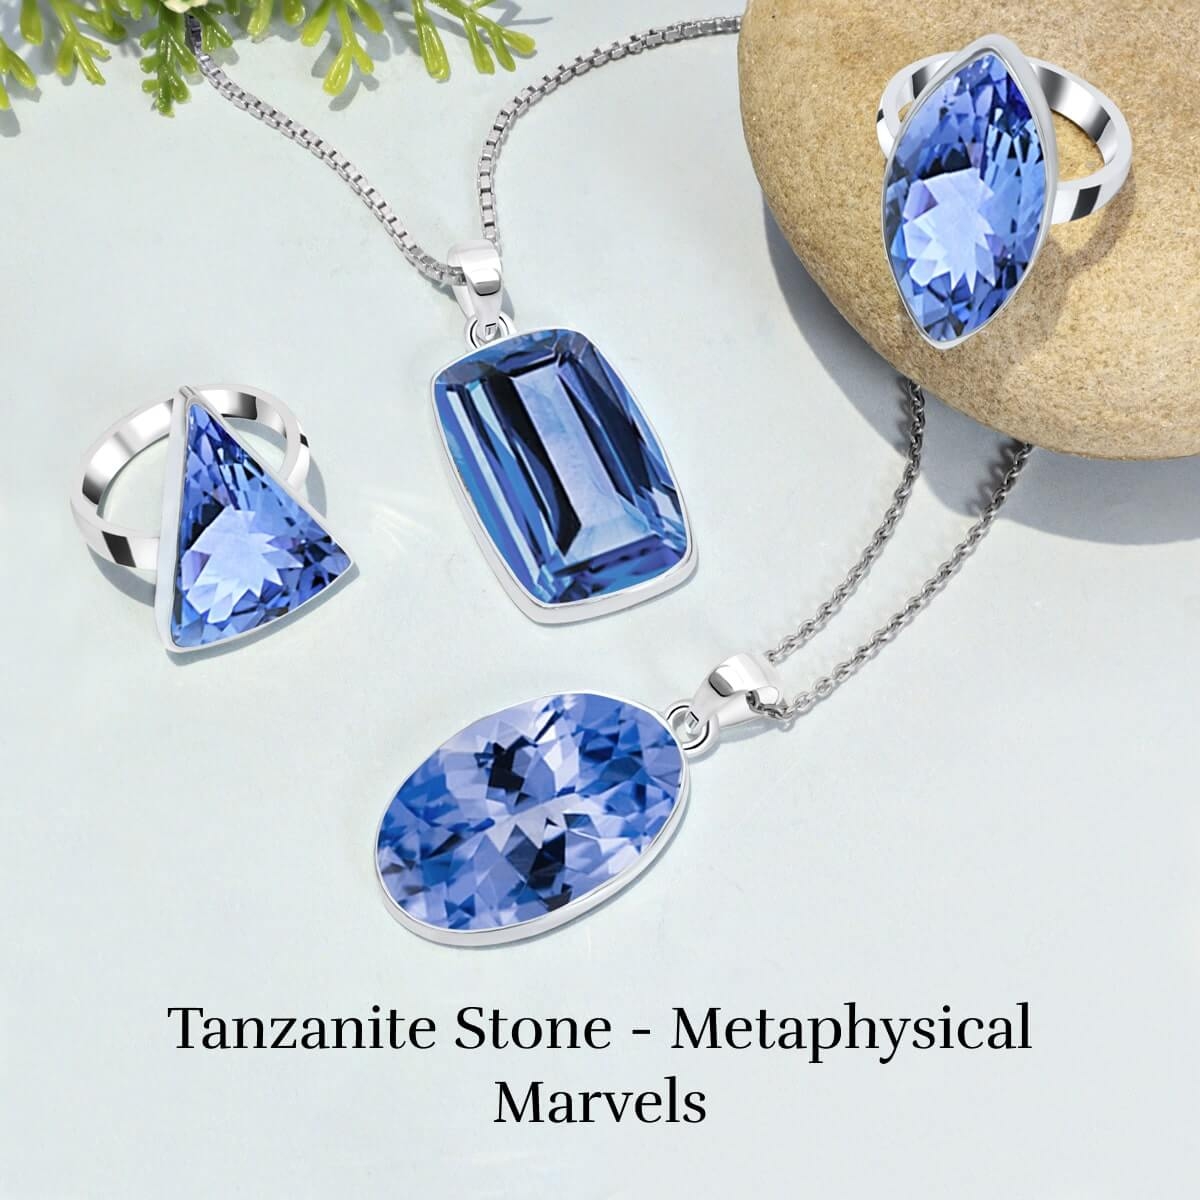 Metaphysical properties of Tanzanite gemstone